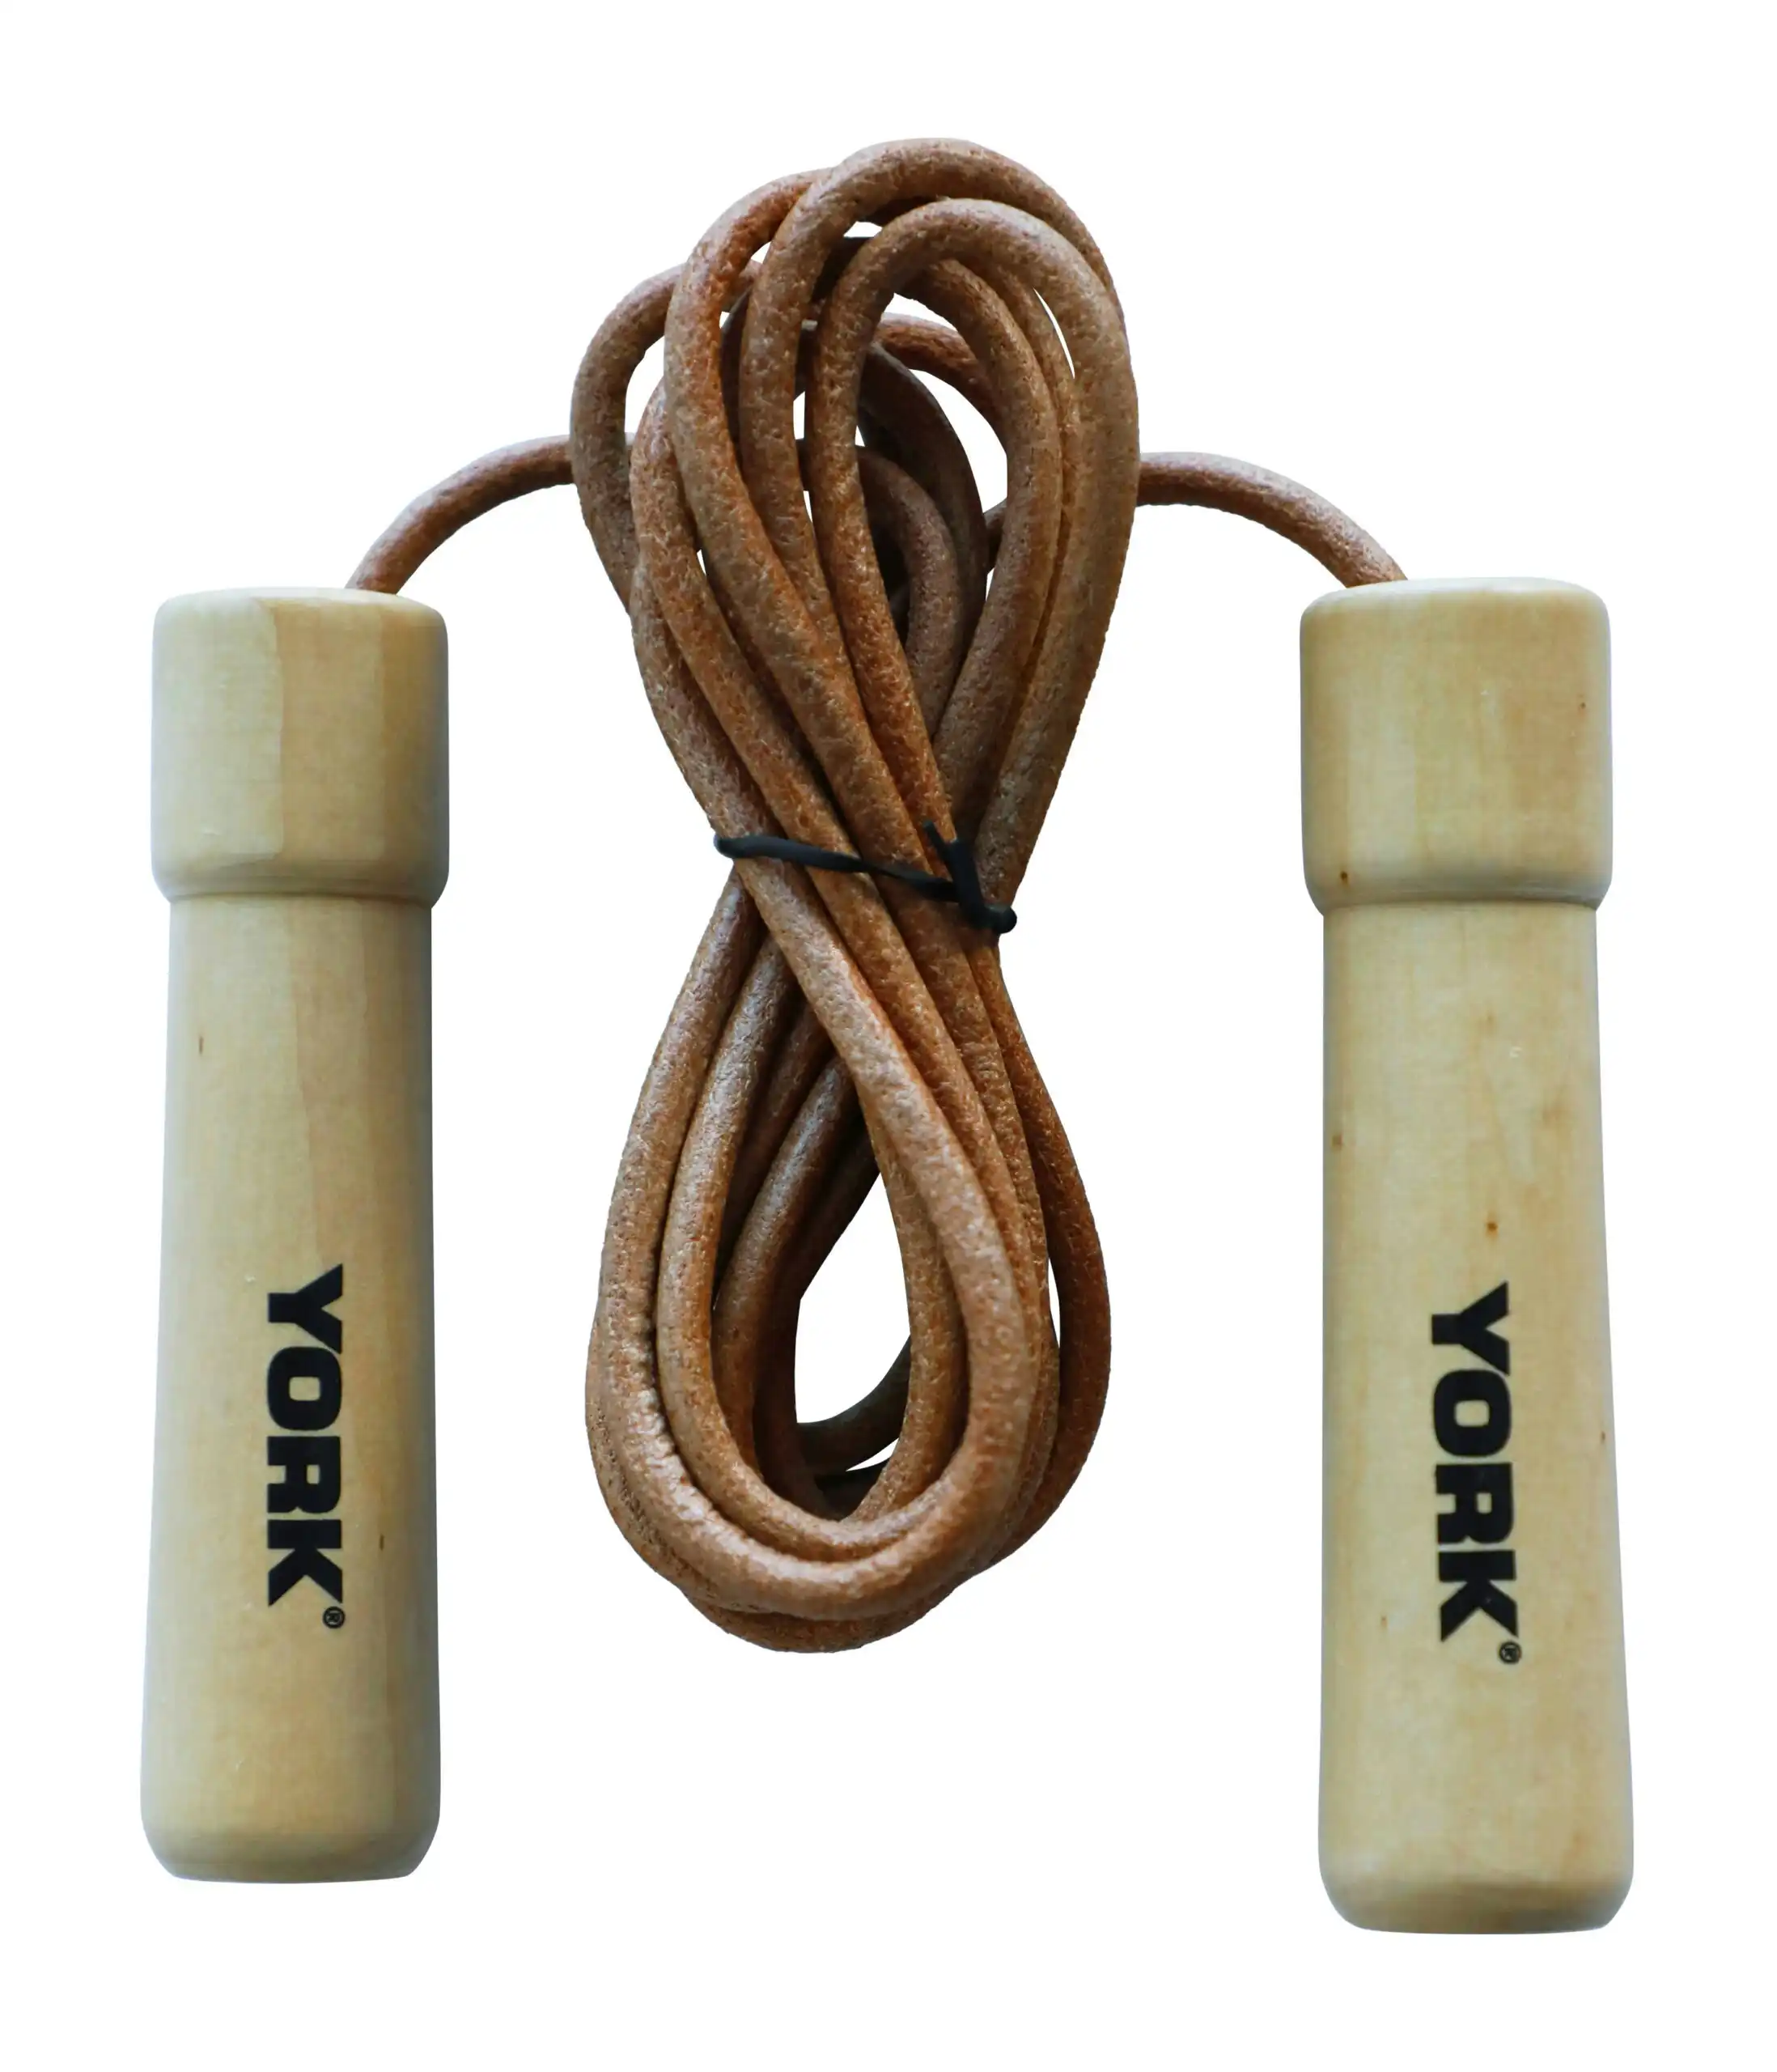 York Fitness Leather skip rope